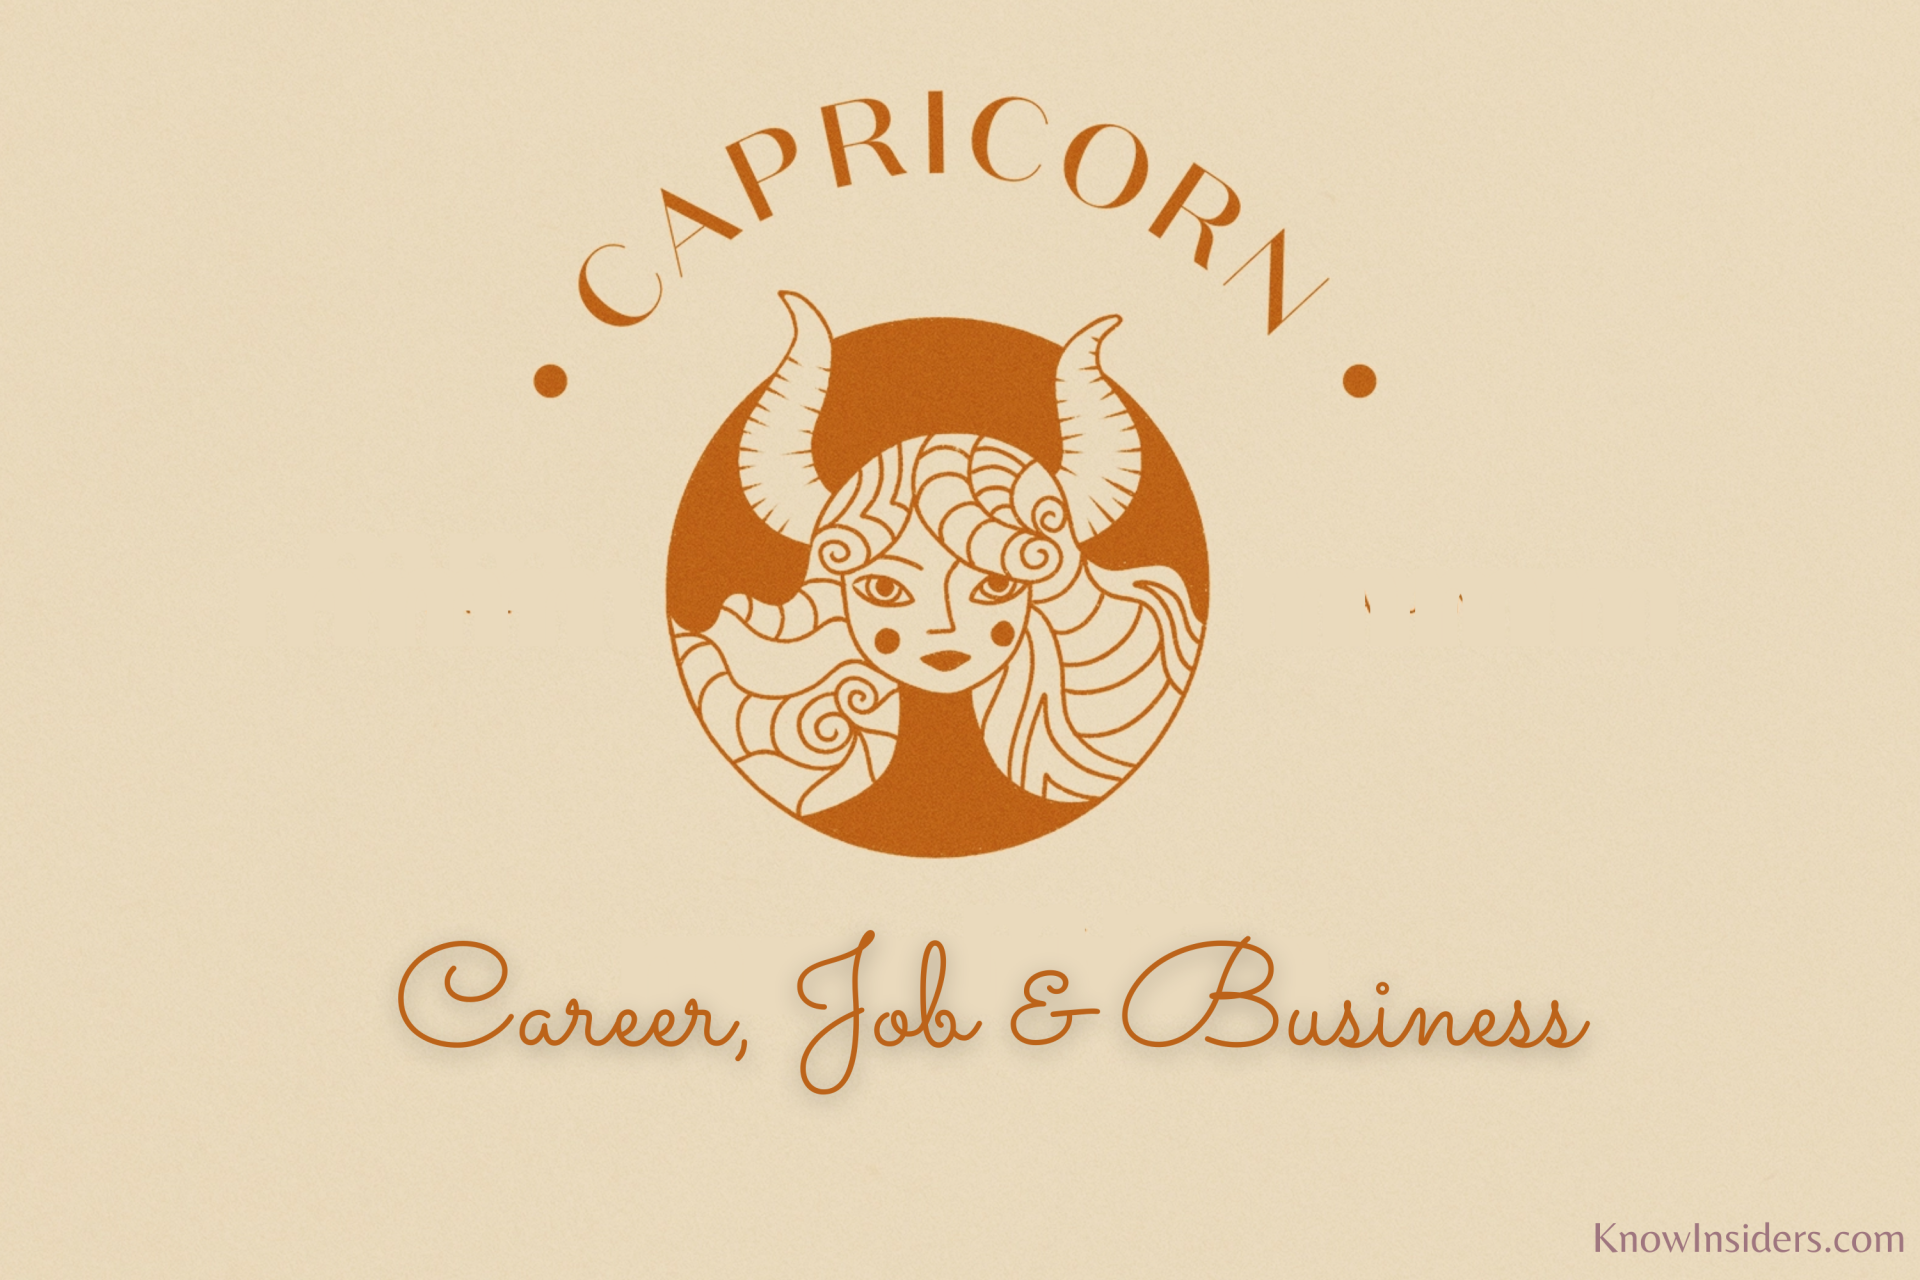 CAPRICORN Horoscope: Astrological Predictions for Career, Jobs & Business